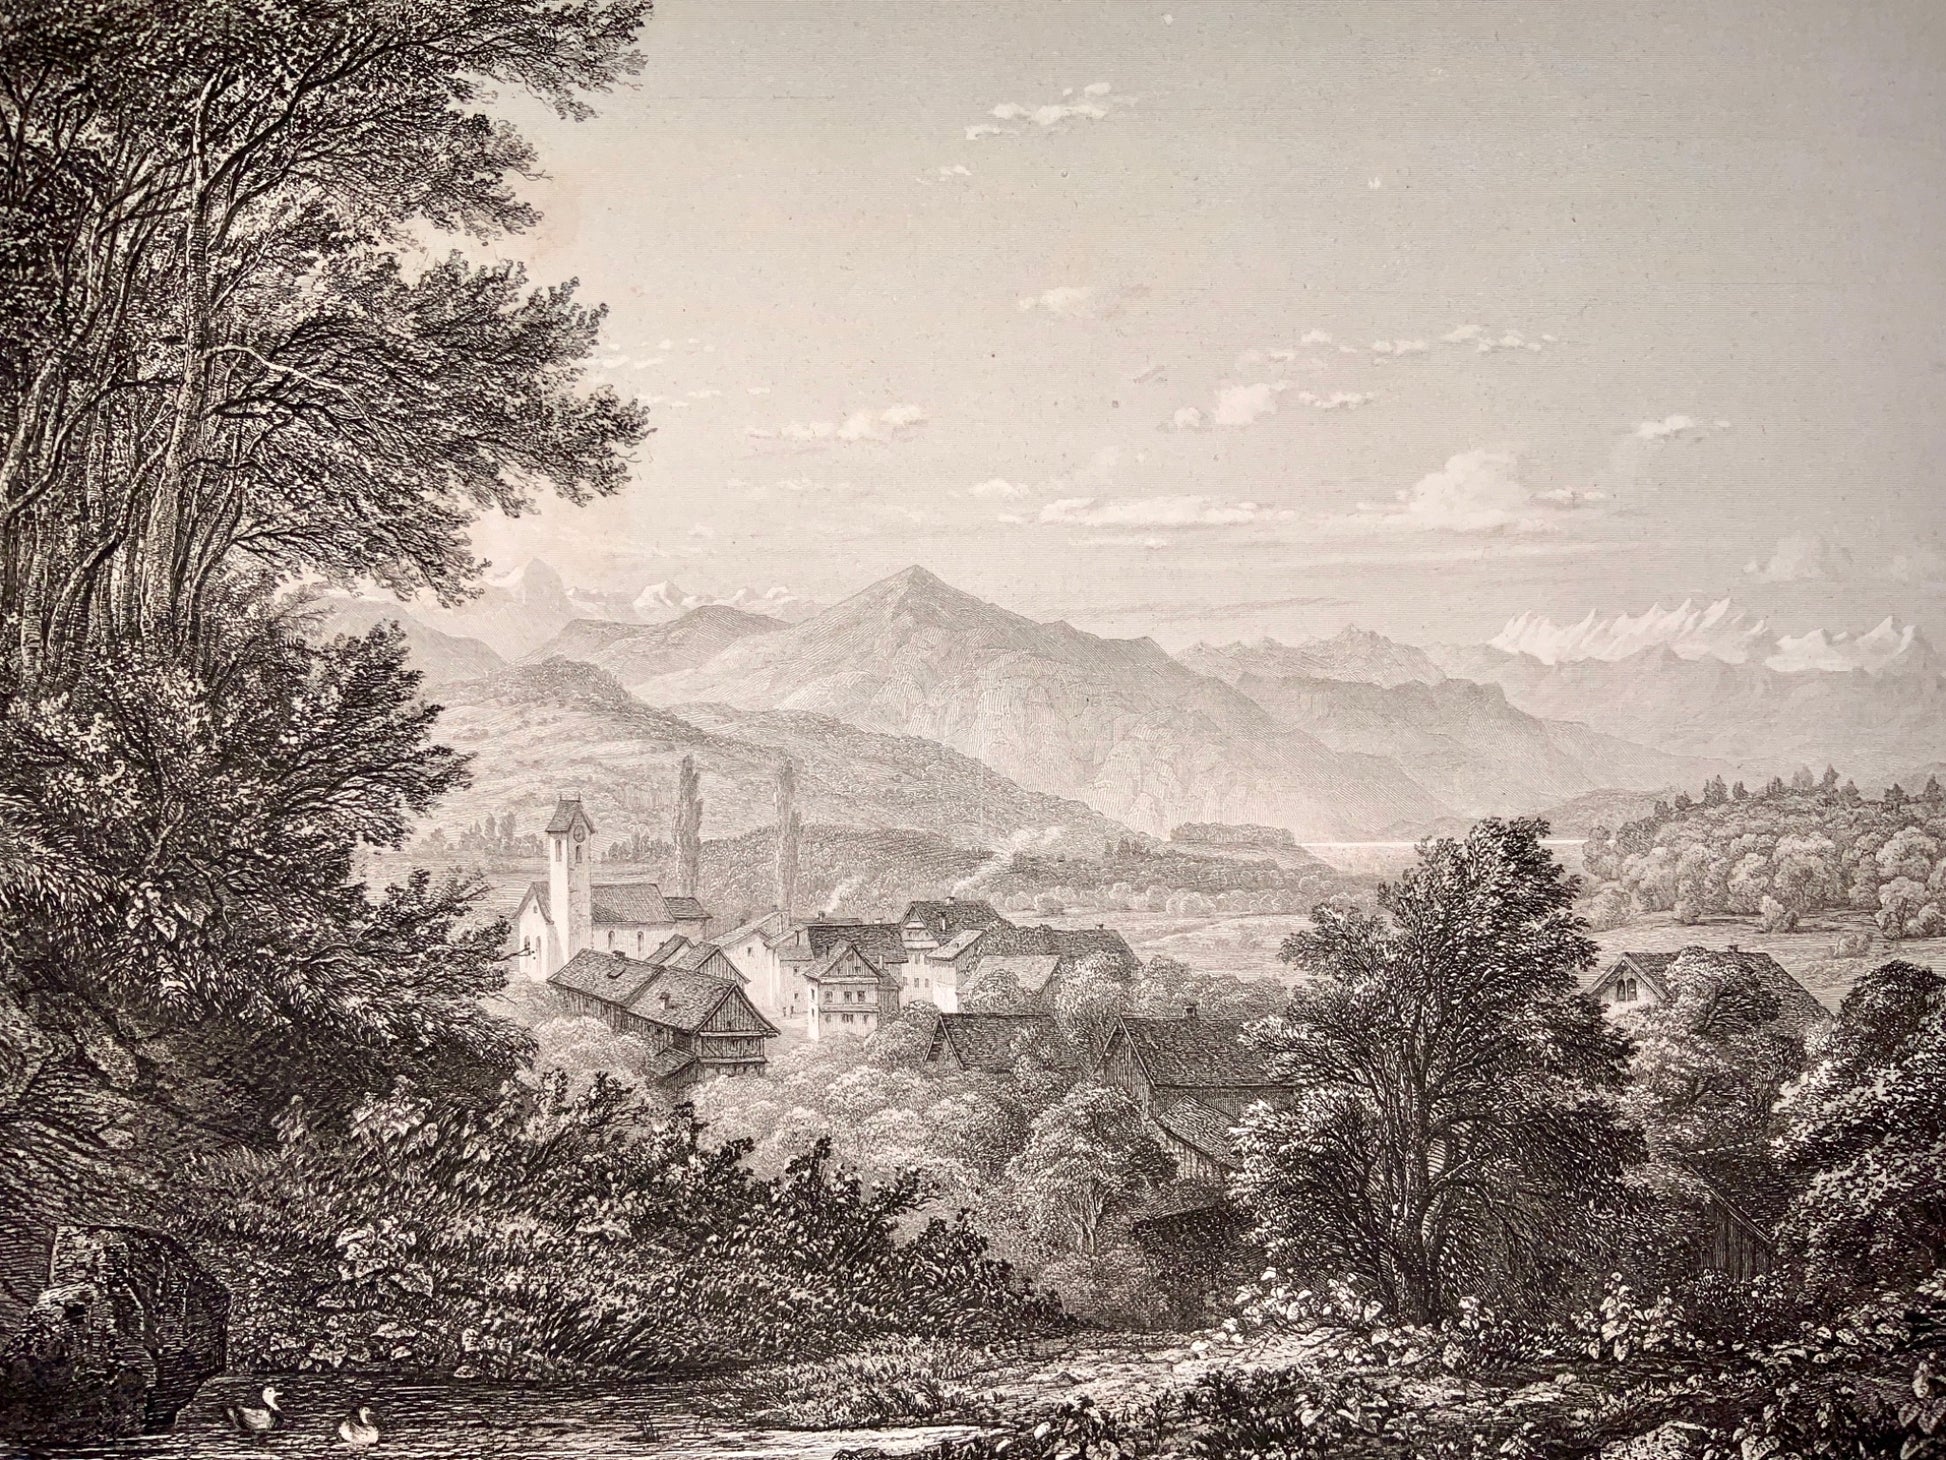 1830 c J. Ulrich del. large steel engraving HAUSEN am ALBIS Switzerland